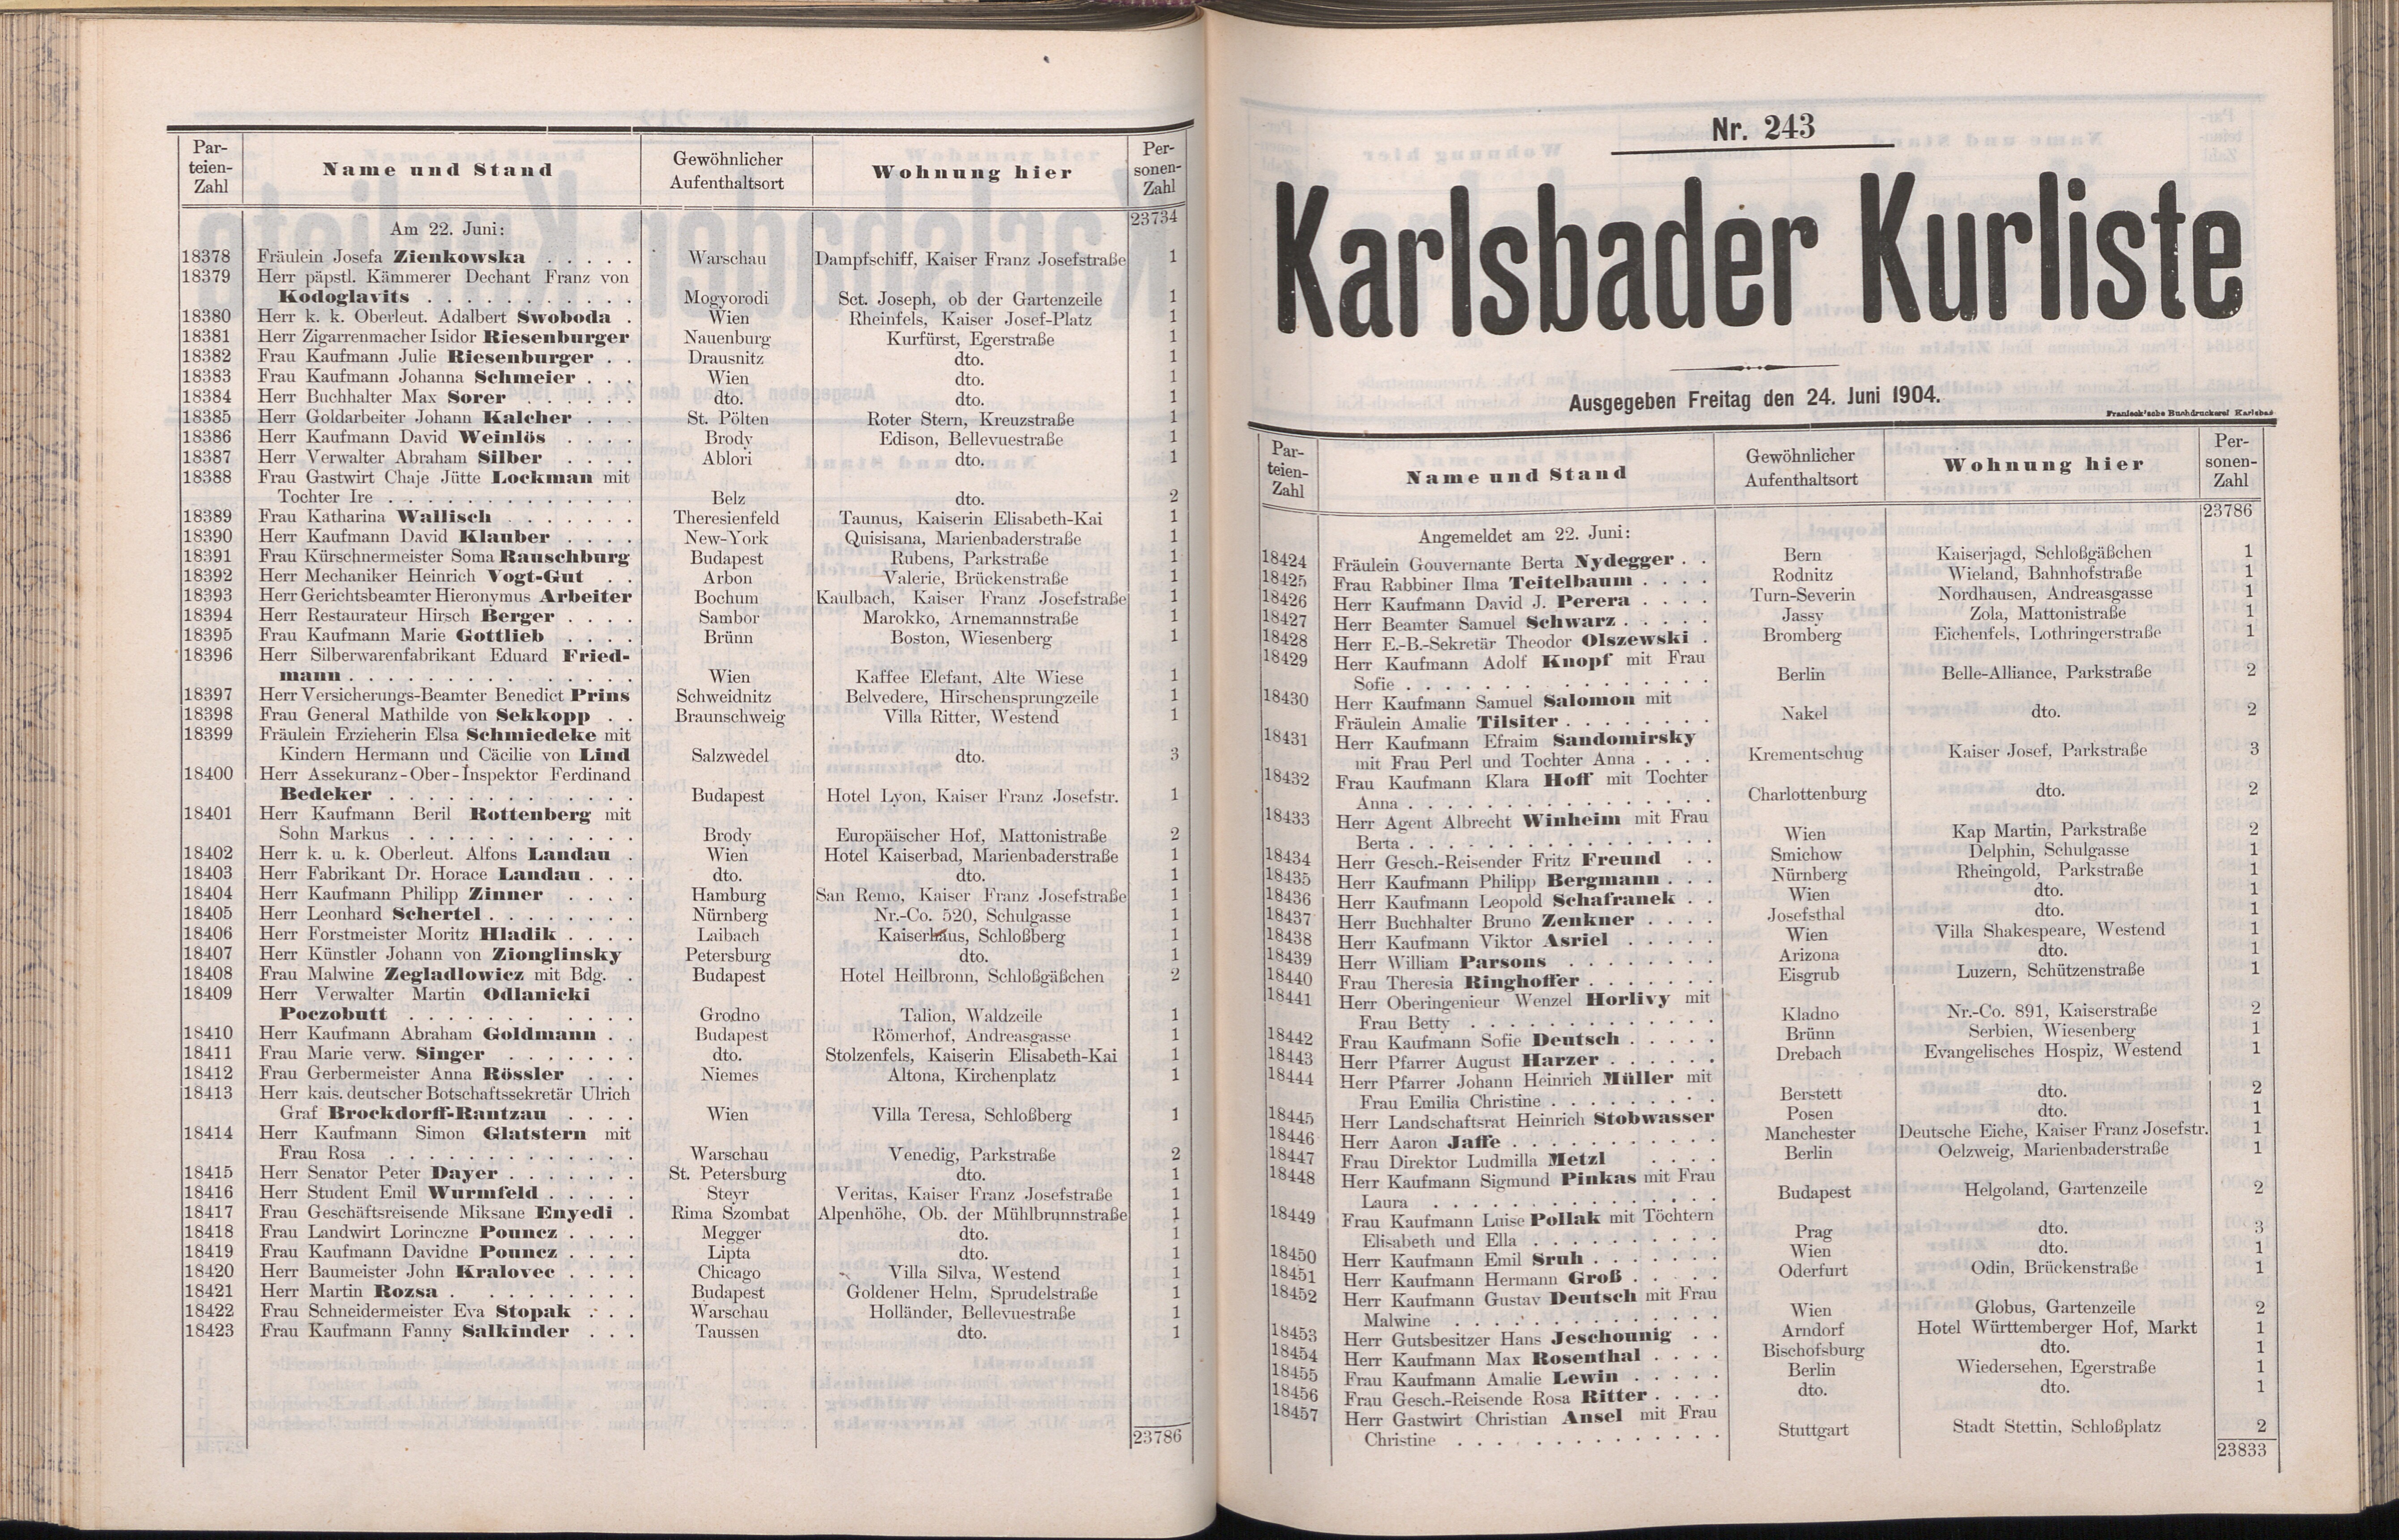 265. soap-kv_knihovna_karlsbader-kurliste-1904_2660